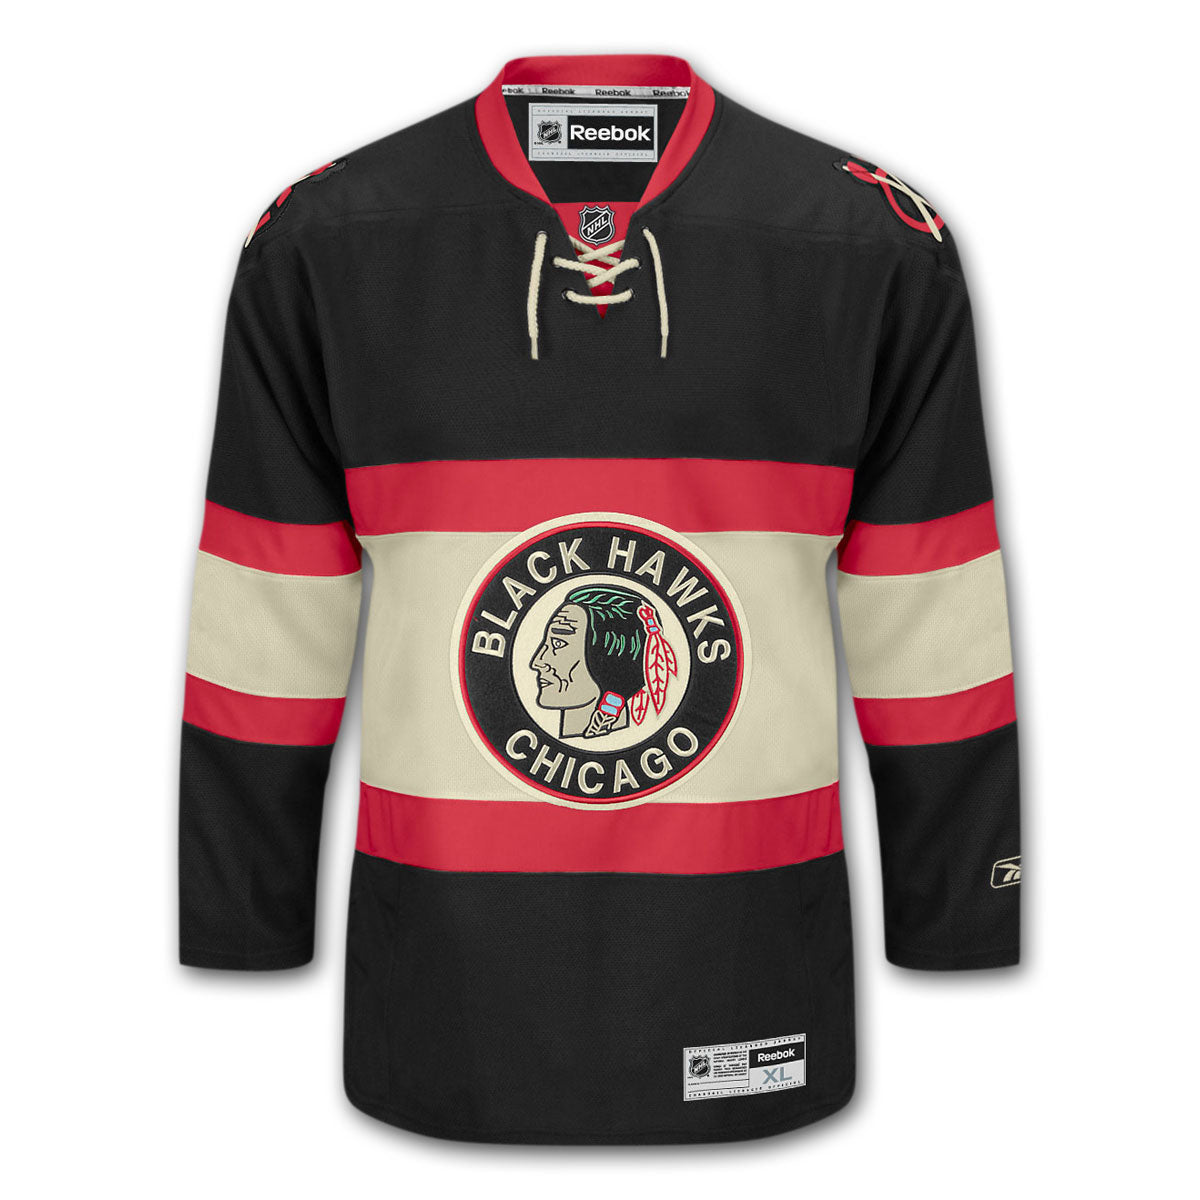 Women's Chicago Blackhawks Premier Stitched Jersey NHL Reebok Small / Red